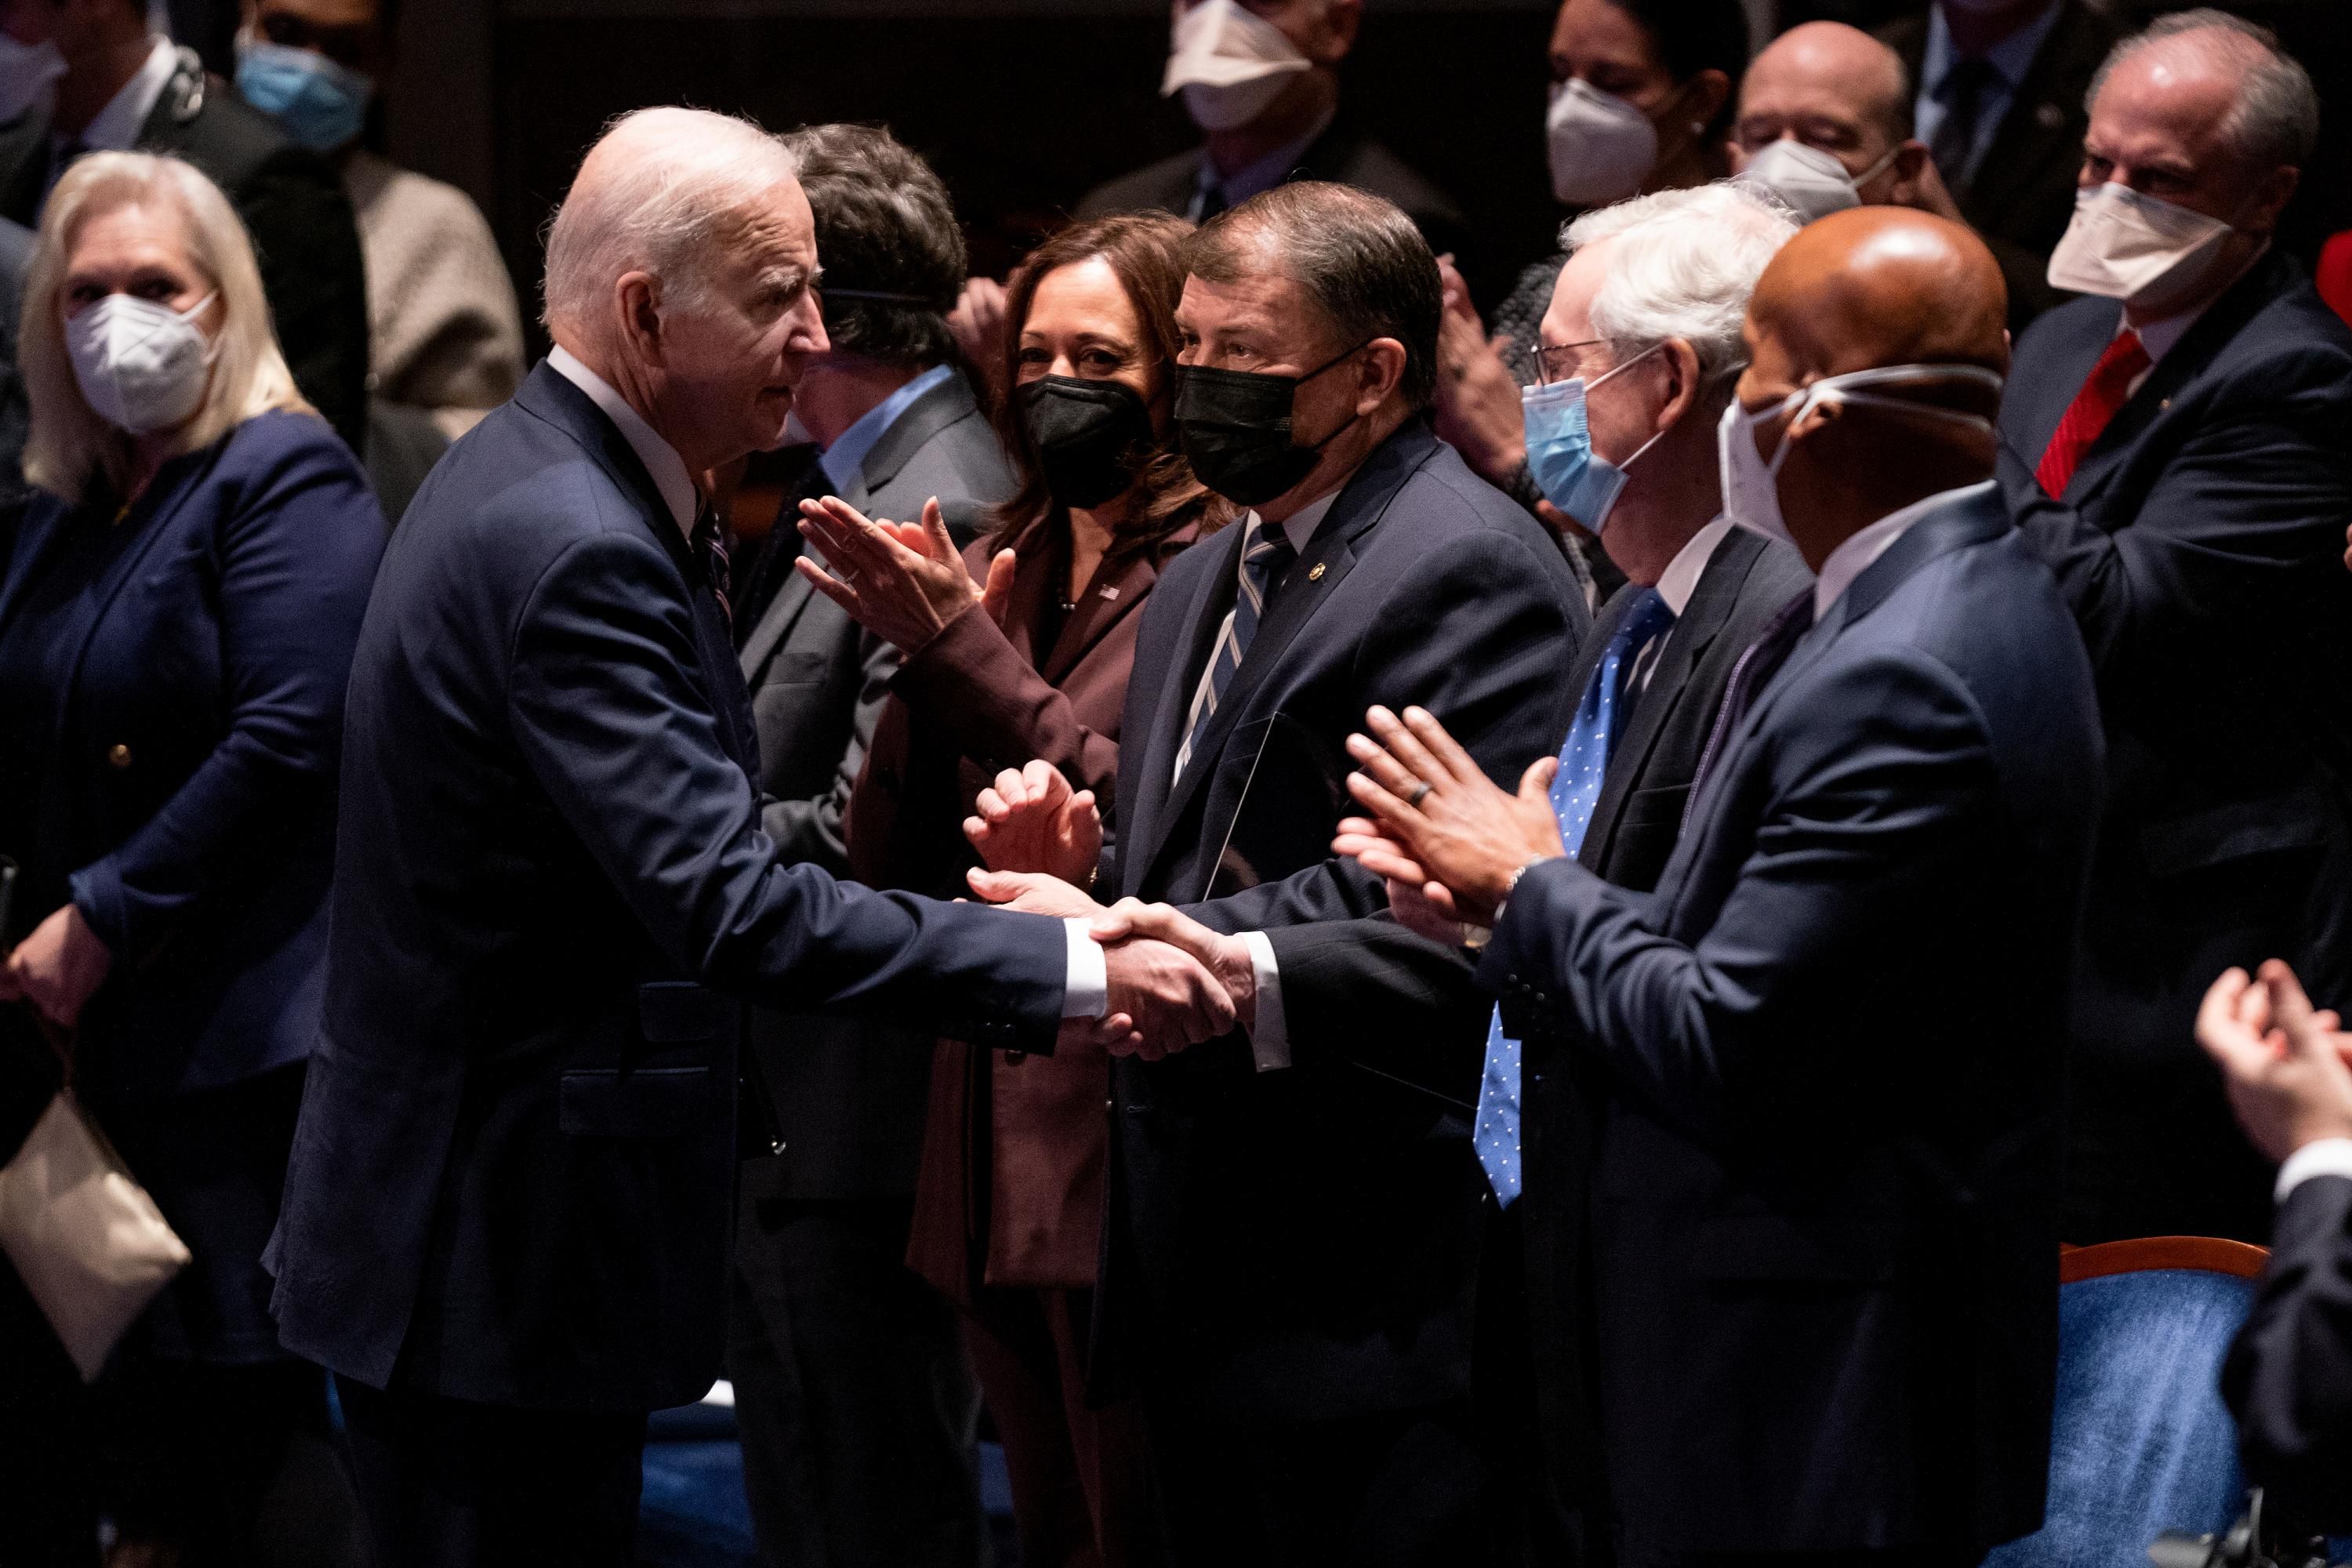 President Joe Biden shakes hands with Republican Senate Minority Leader Mitch McConnell